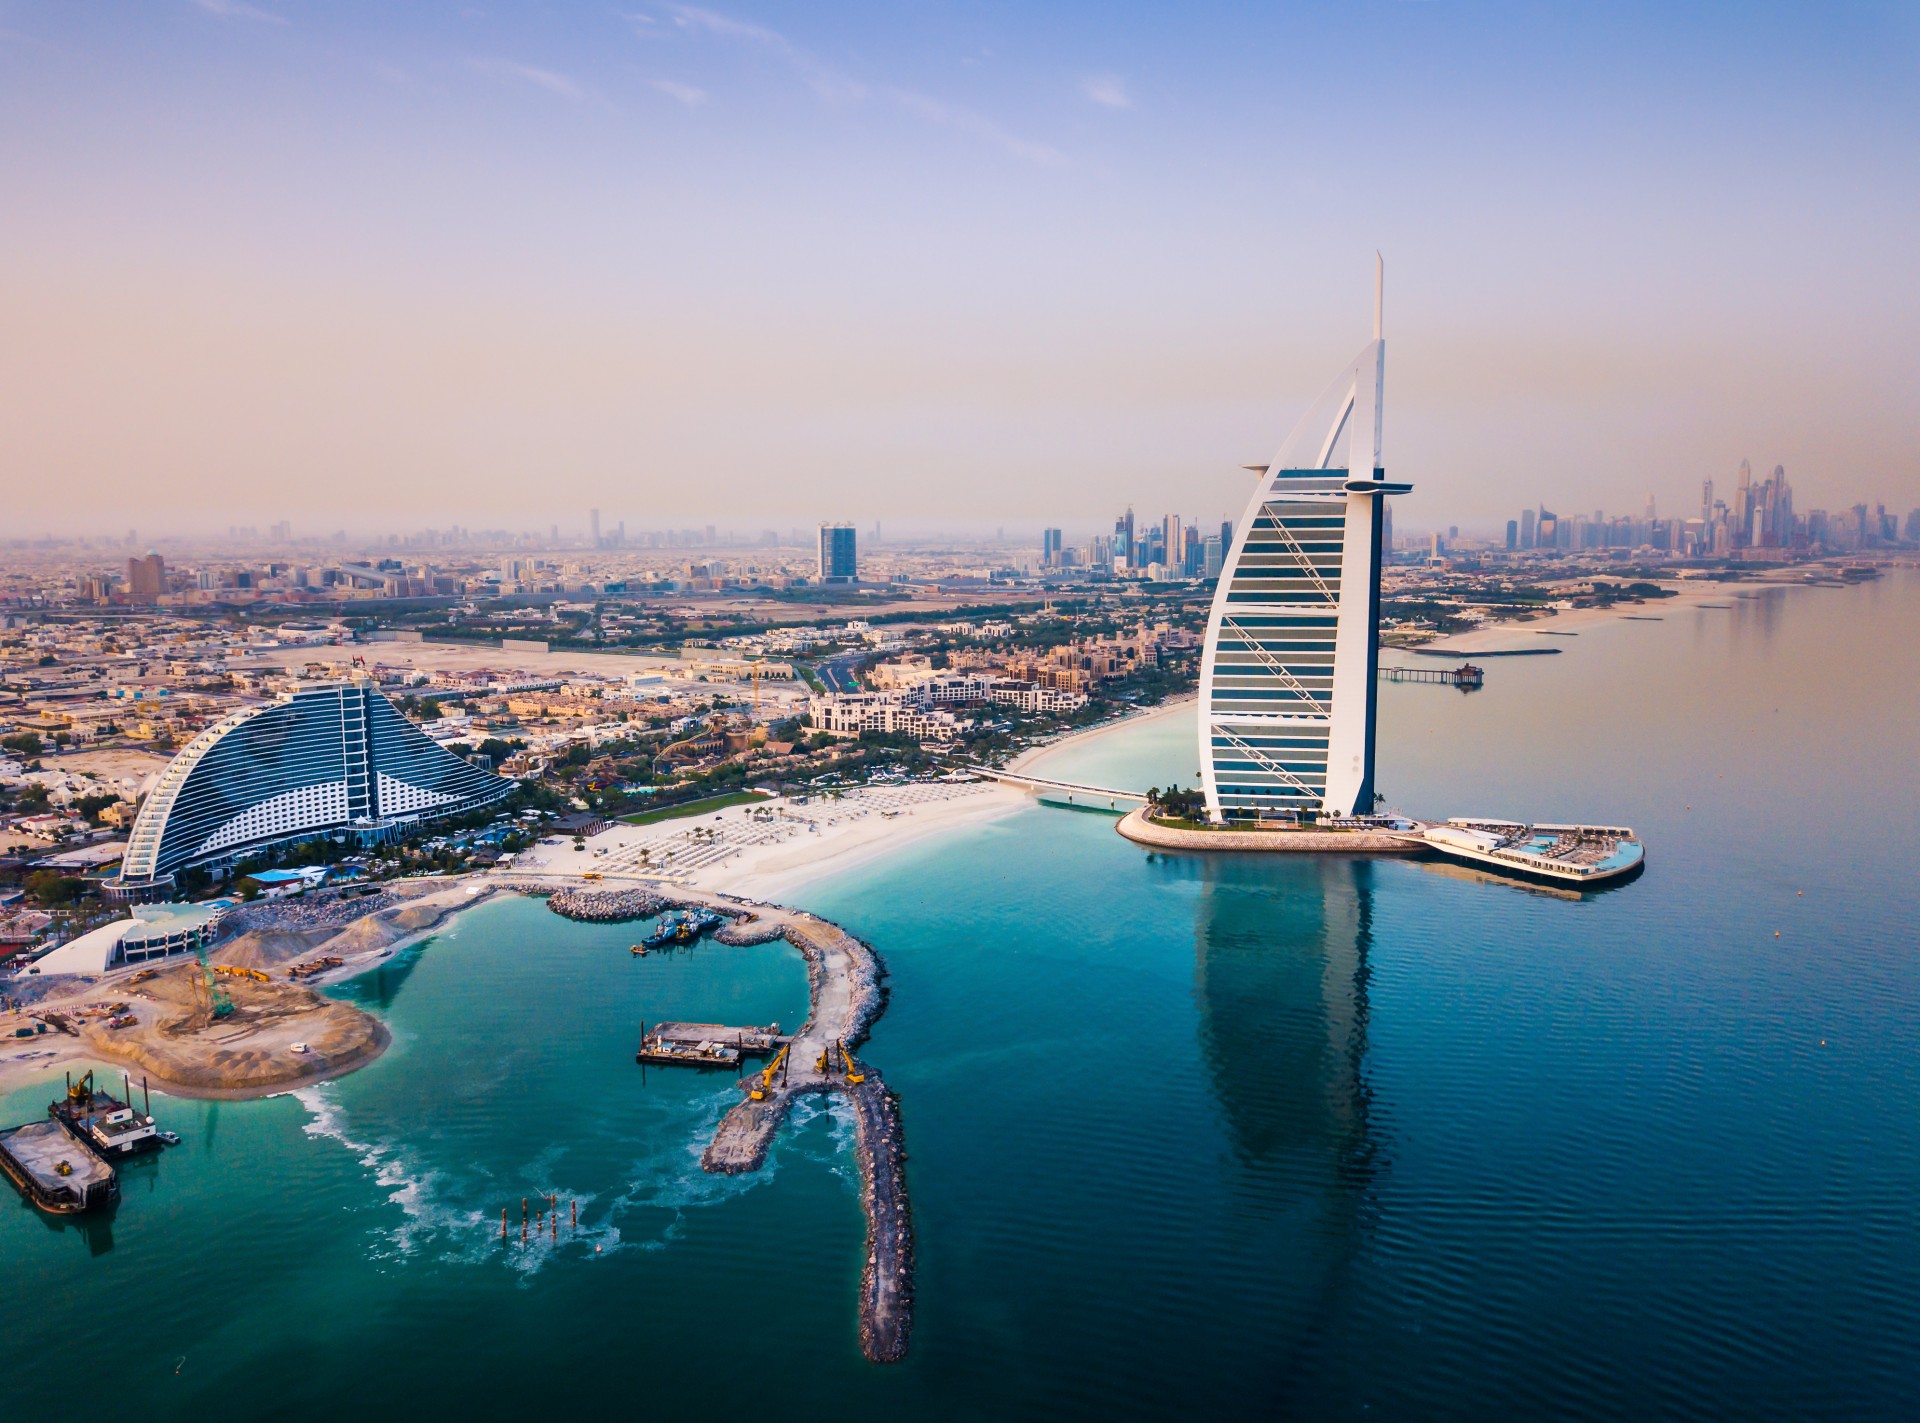 Burj Al Arab: Dubai’s symbolic hotel - We Build Value